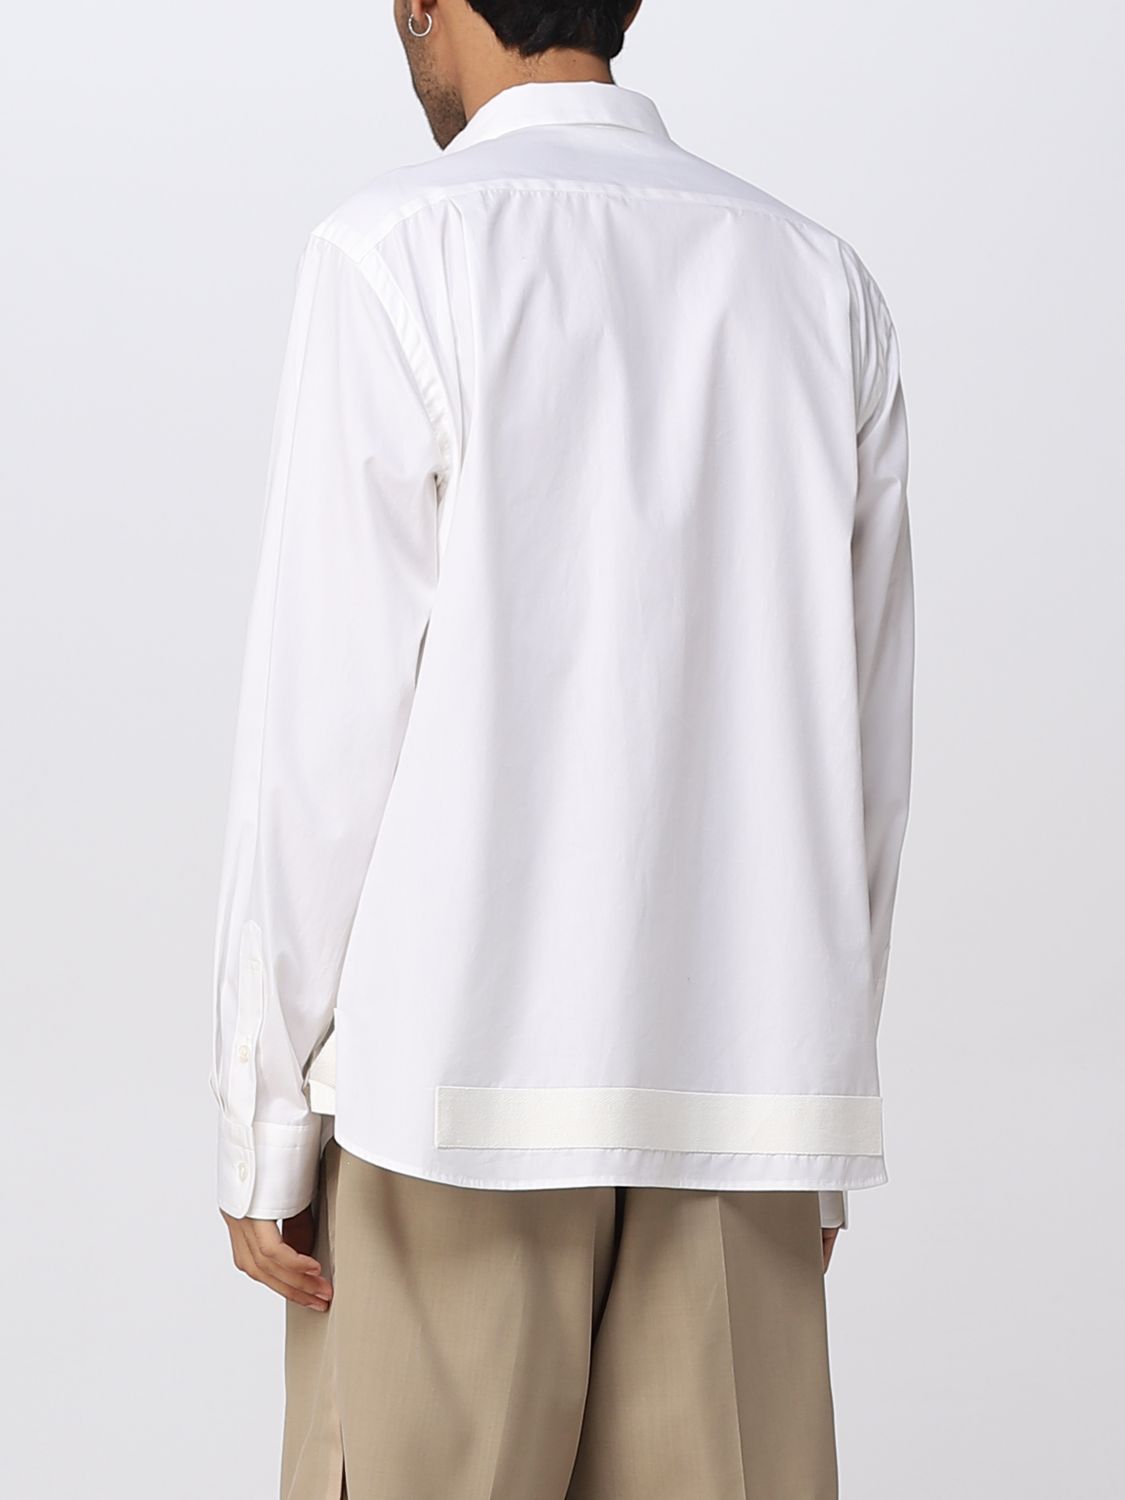 Shirt Sacai: Sacai shirt for man white 3